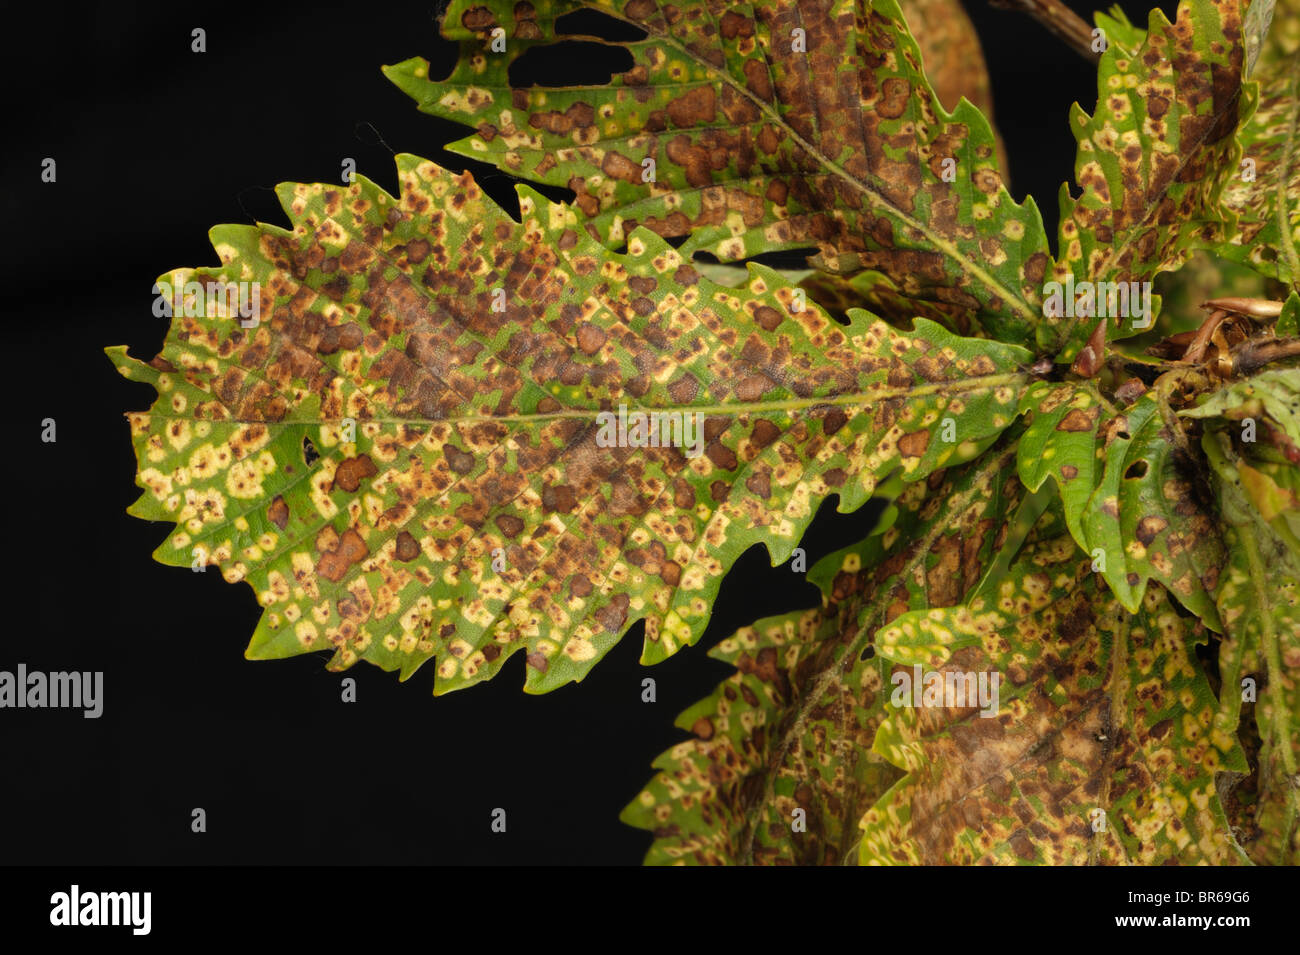 Oak leaf phylloxera (Phylloxera glabra) damage to oak tree leaves Stock Photo